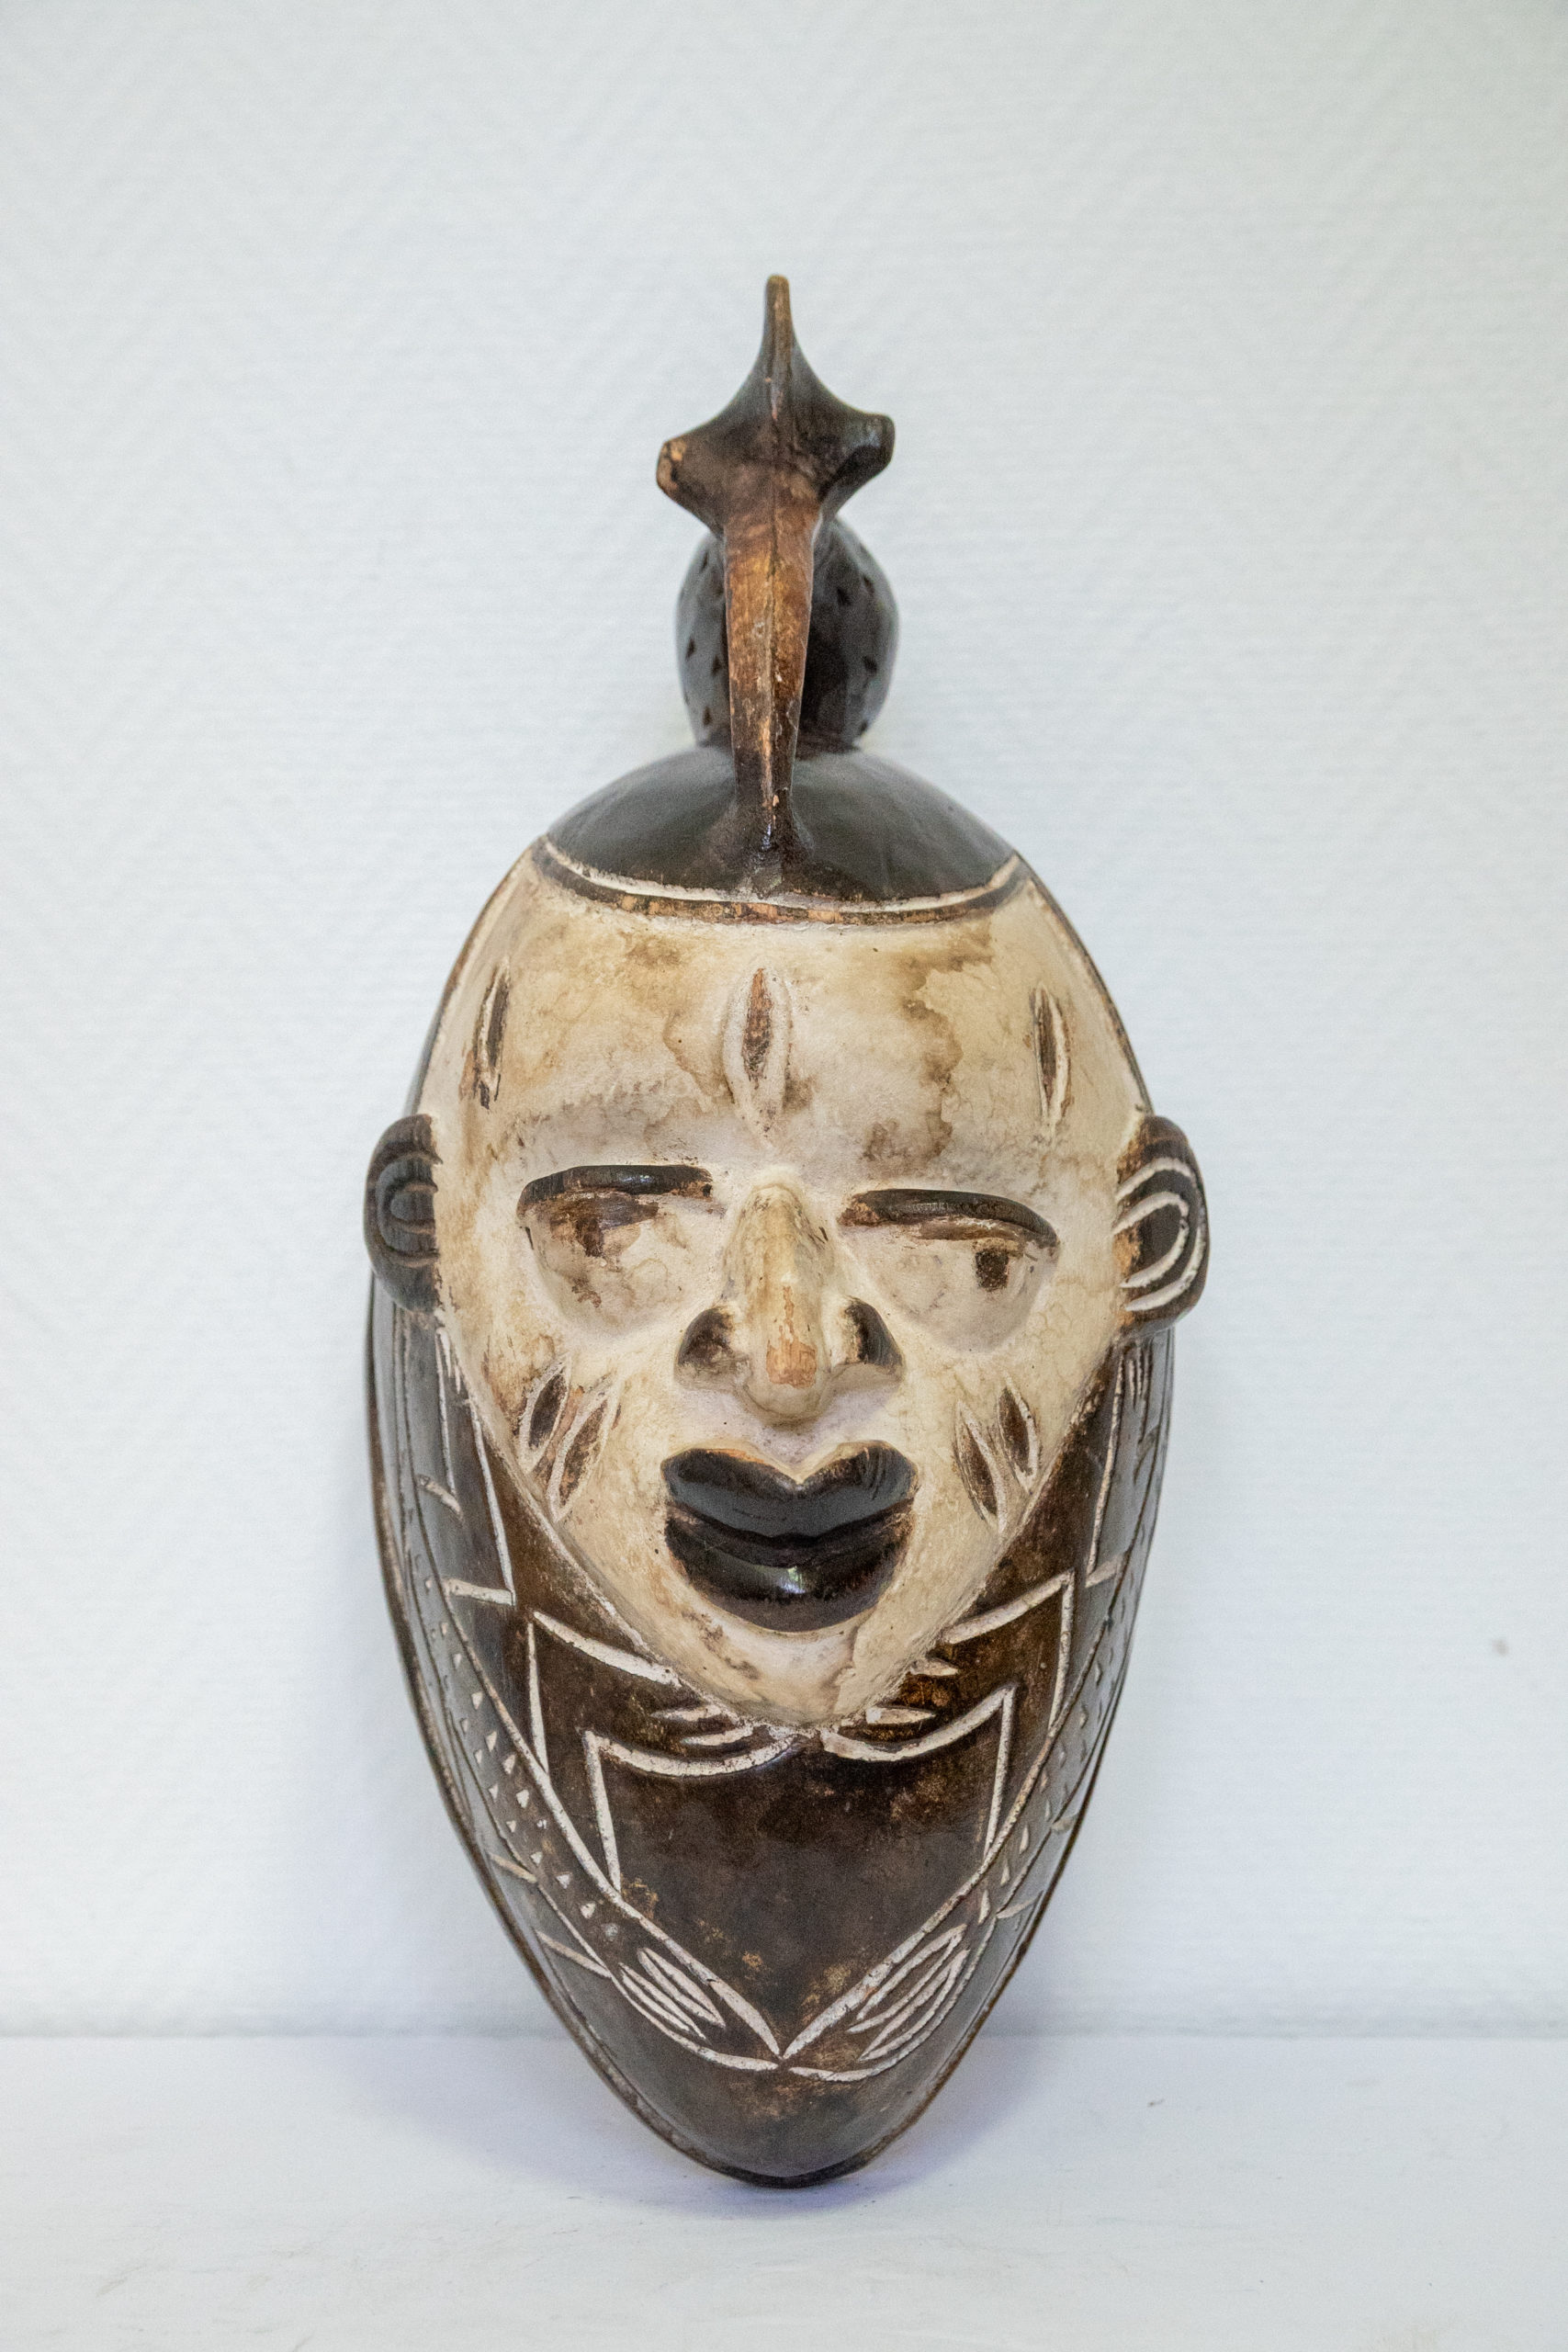 masque-yoruba-geleda-niger-masque-africain-collection-privée-art-primitfif-liège-marchand-paris-auroremorisse1